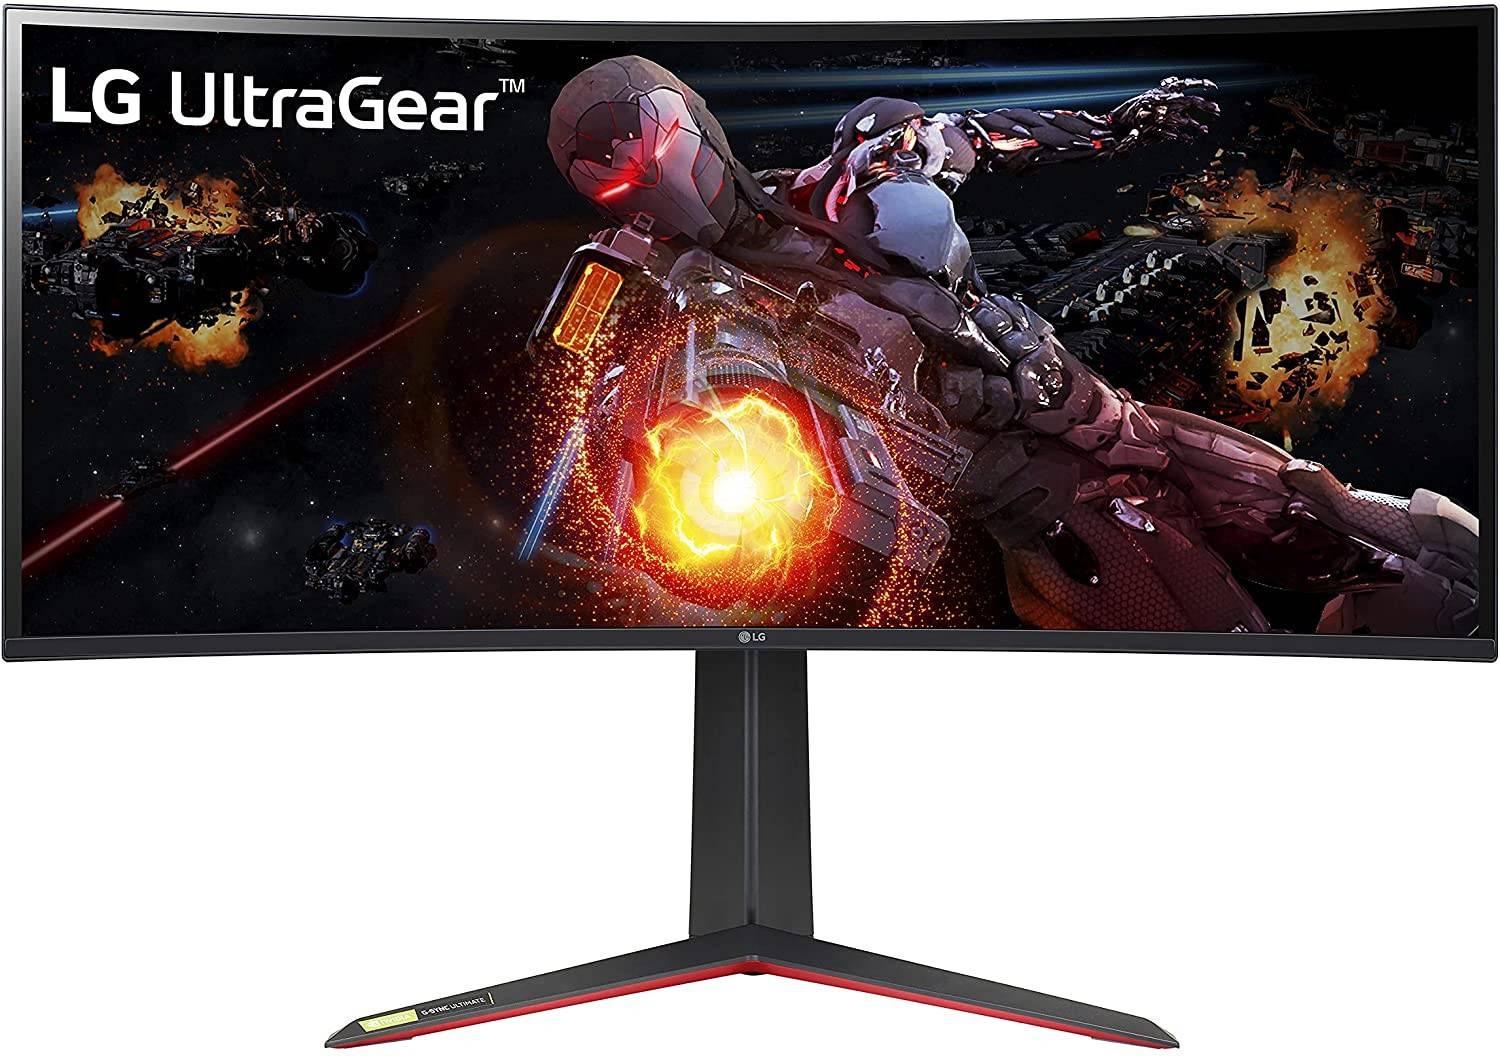 LG Ultragear gaming monitor